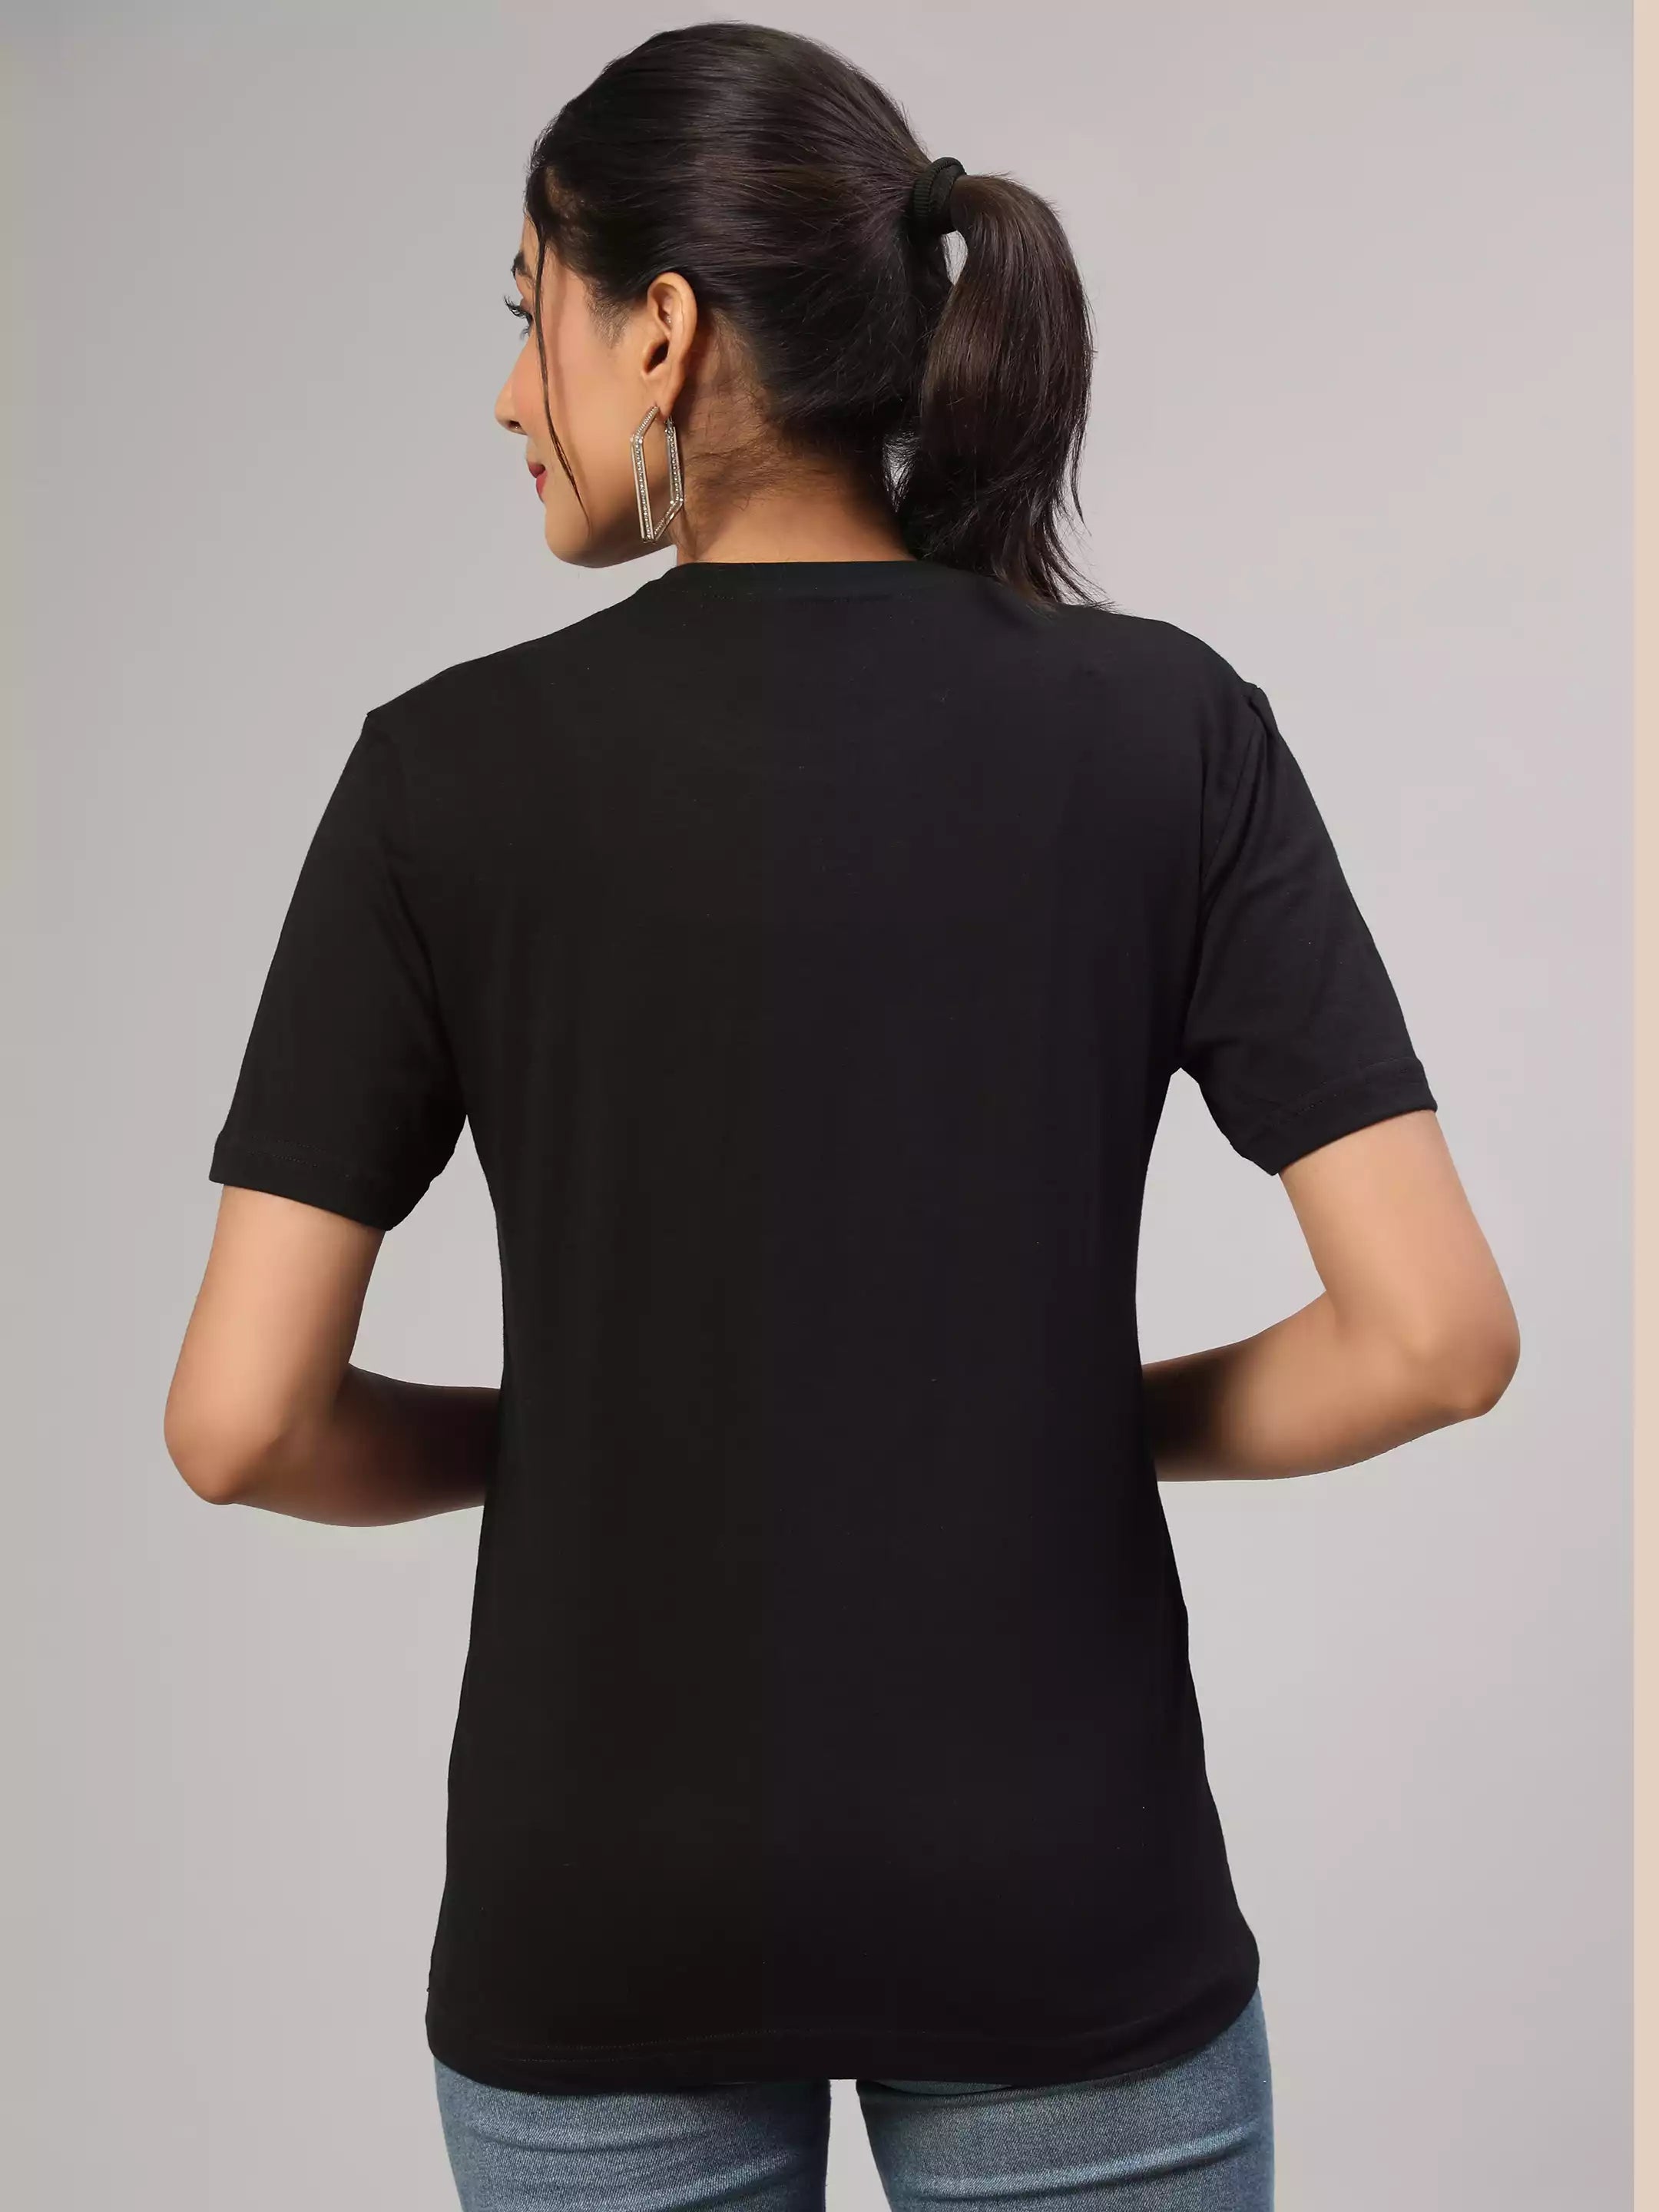 Hello There - Sukhiaatma Unisex Graphic Printed Black T-shirt